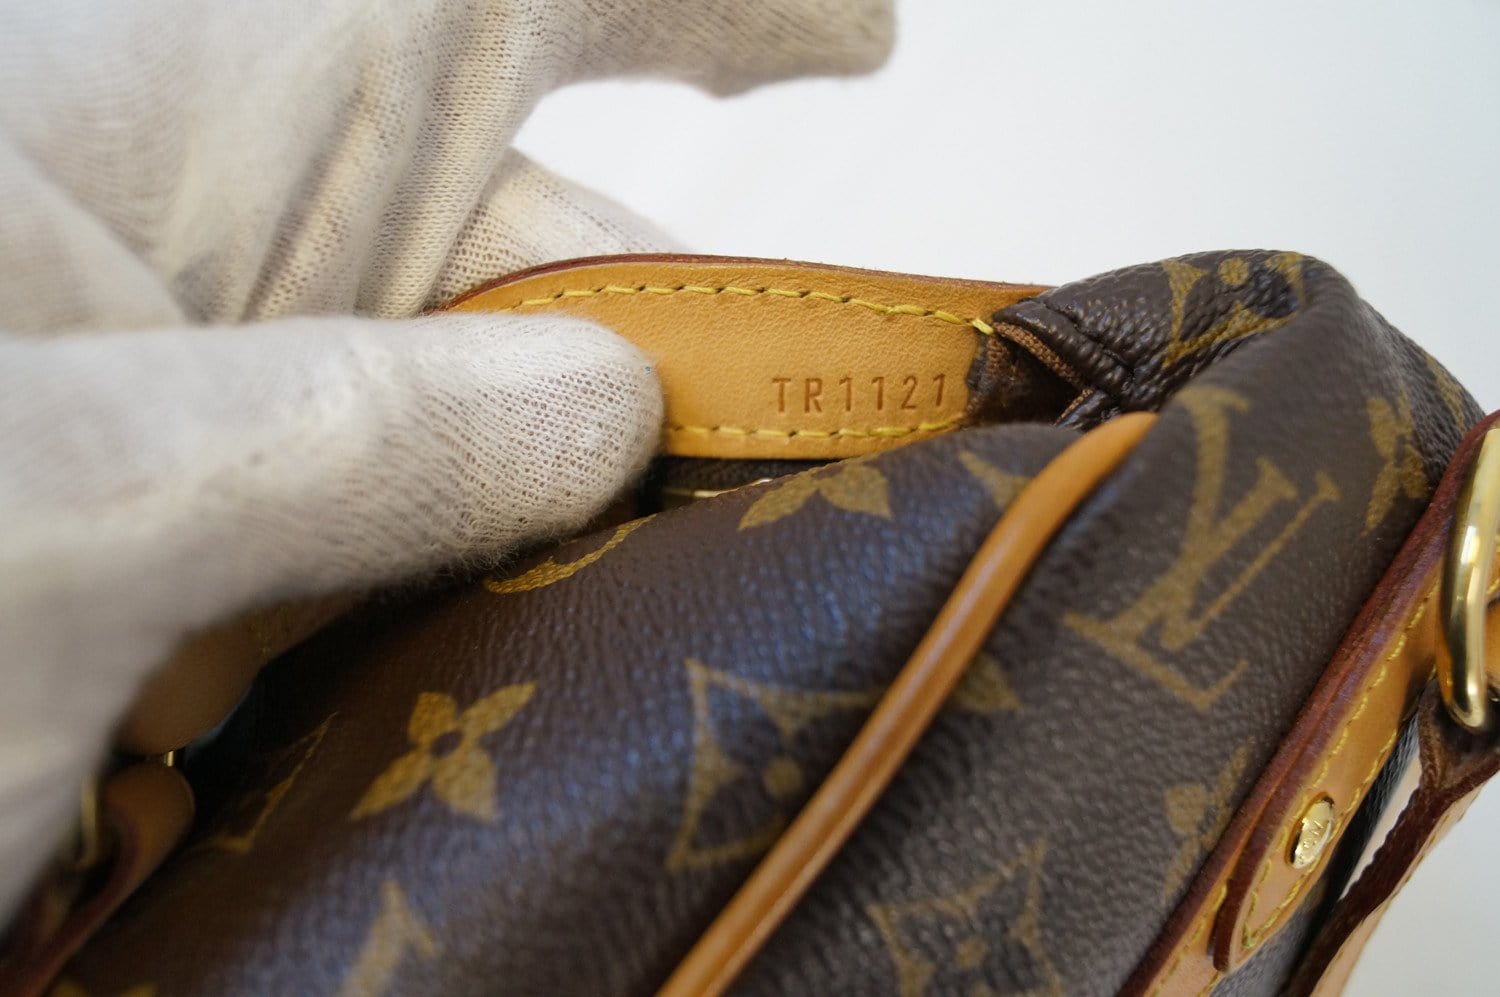 Louis Vuitton Monogram Stresa Pm Tote Bag N42220 Lv Auction